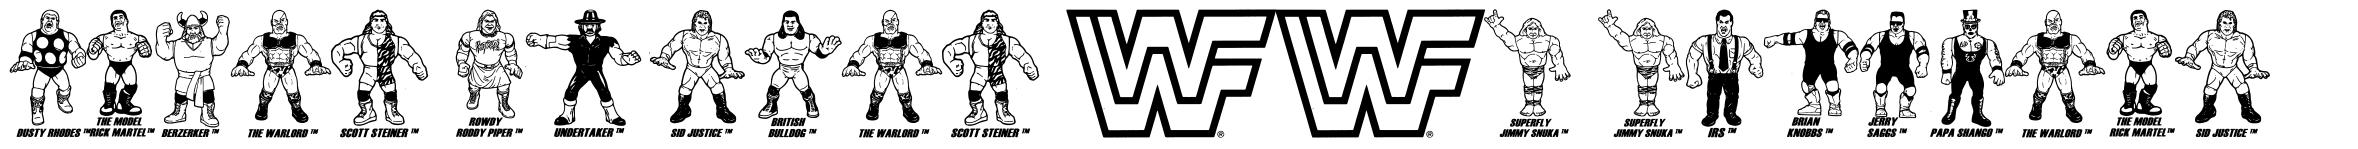 Retro Hasbro WWF Figures carattere